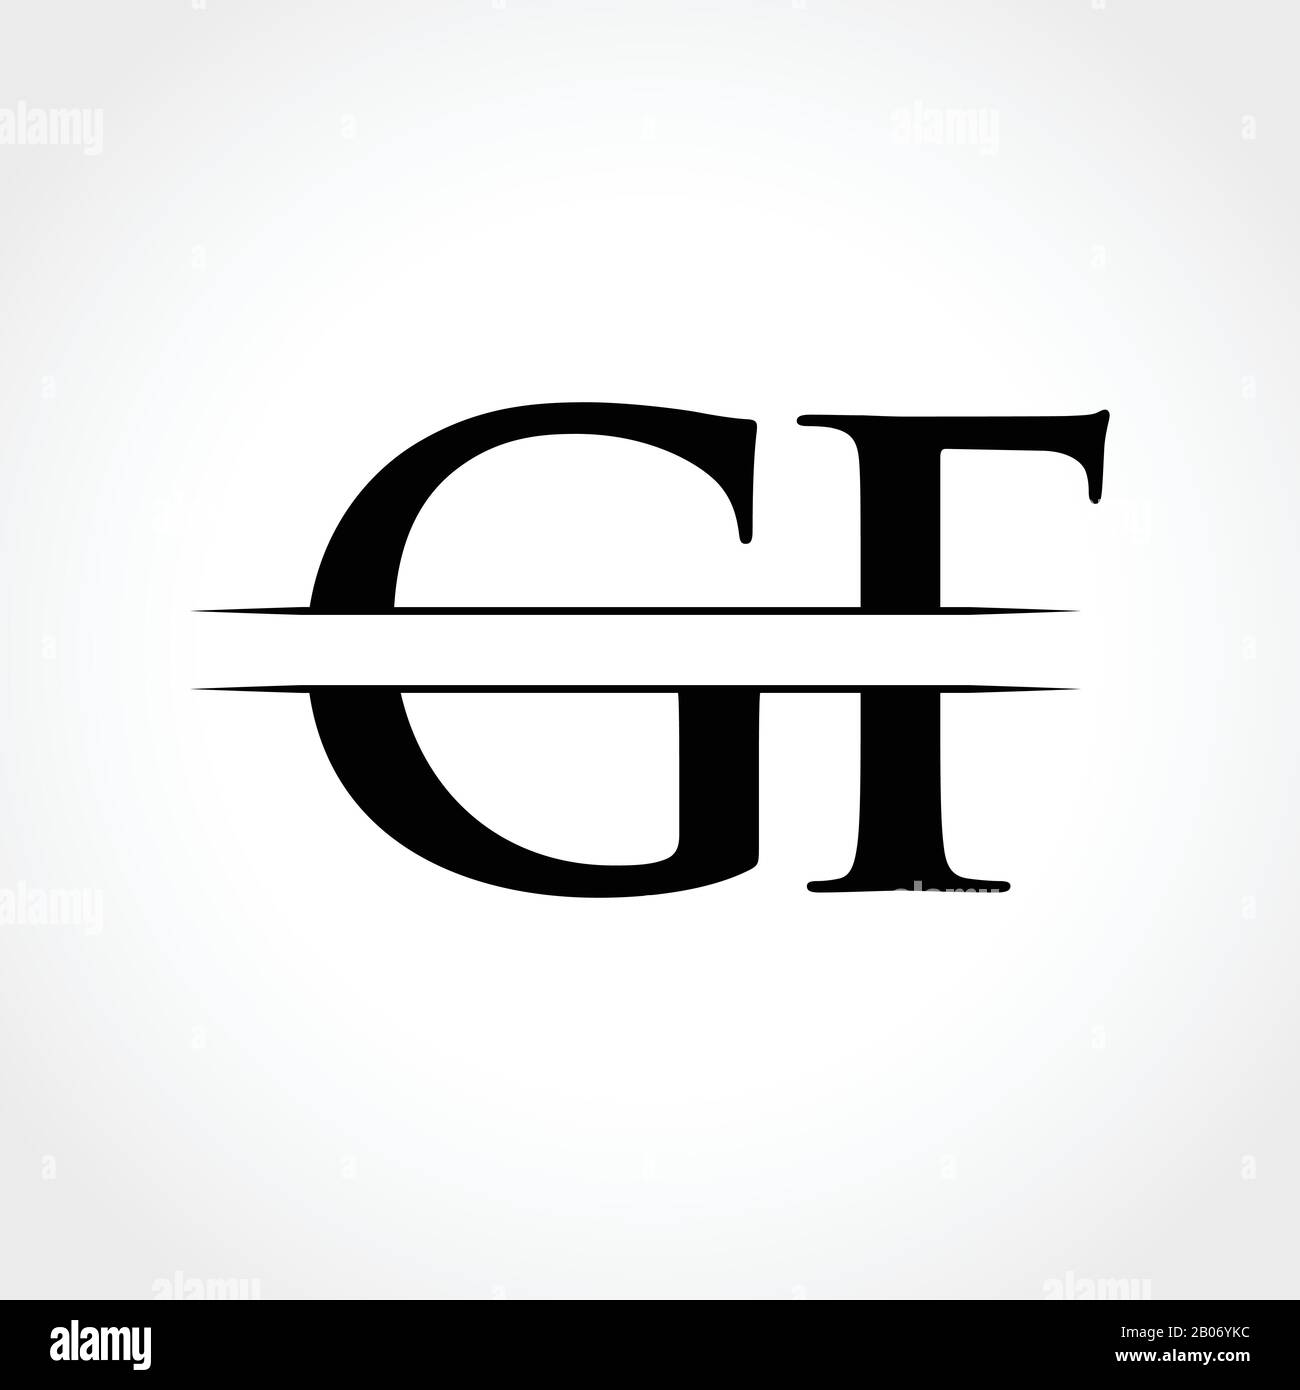 4,342 Gf Logo Images, Stock Photos & Vectors | Shutterstock